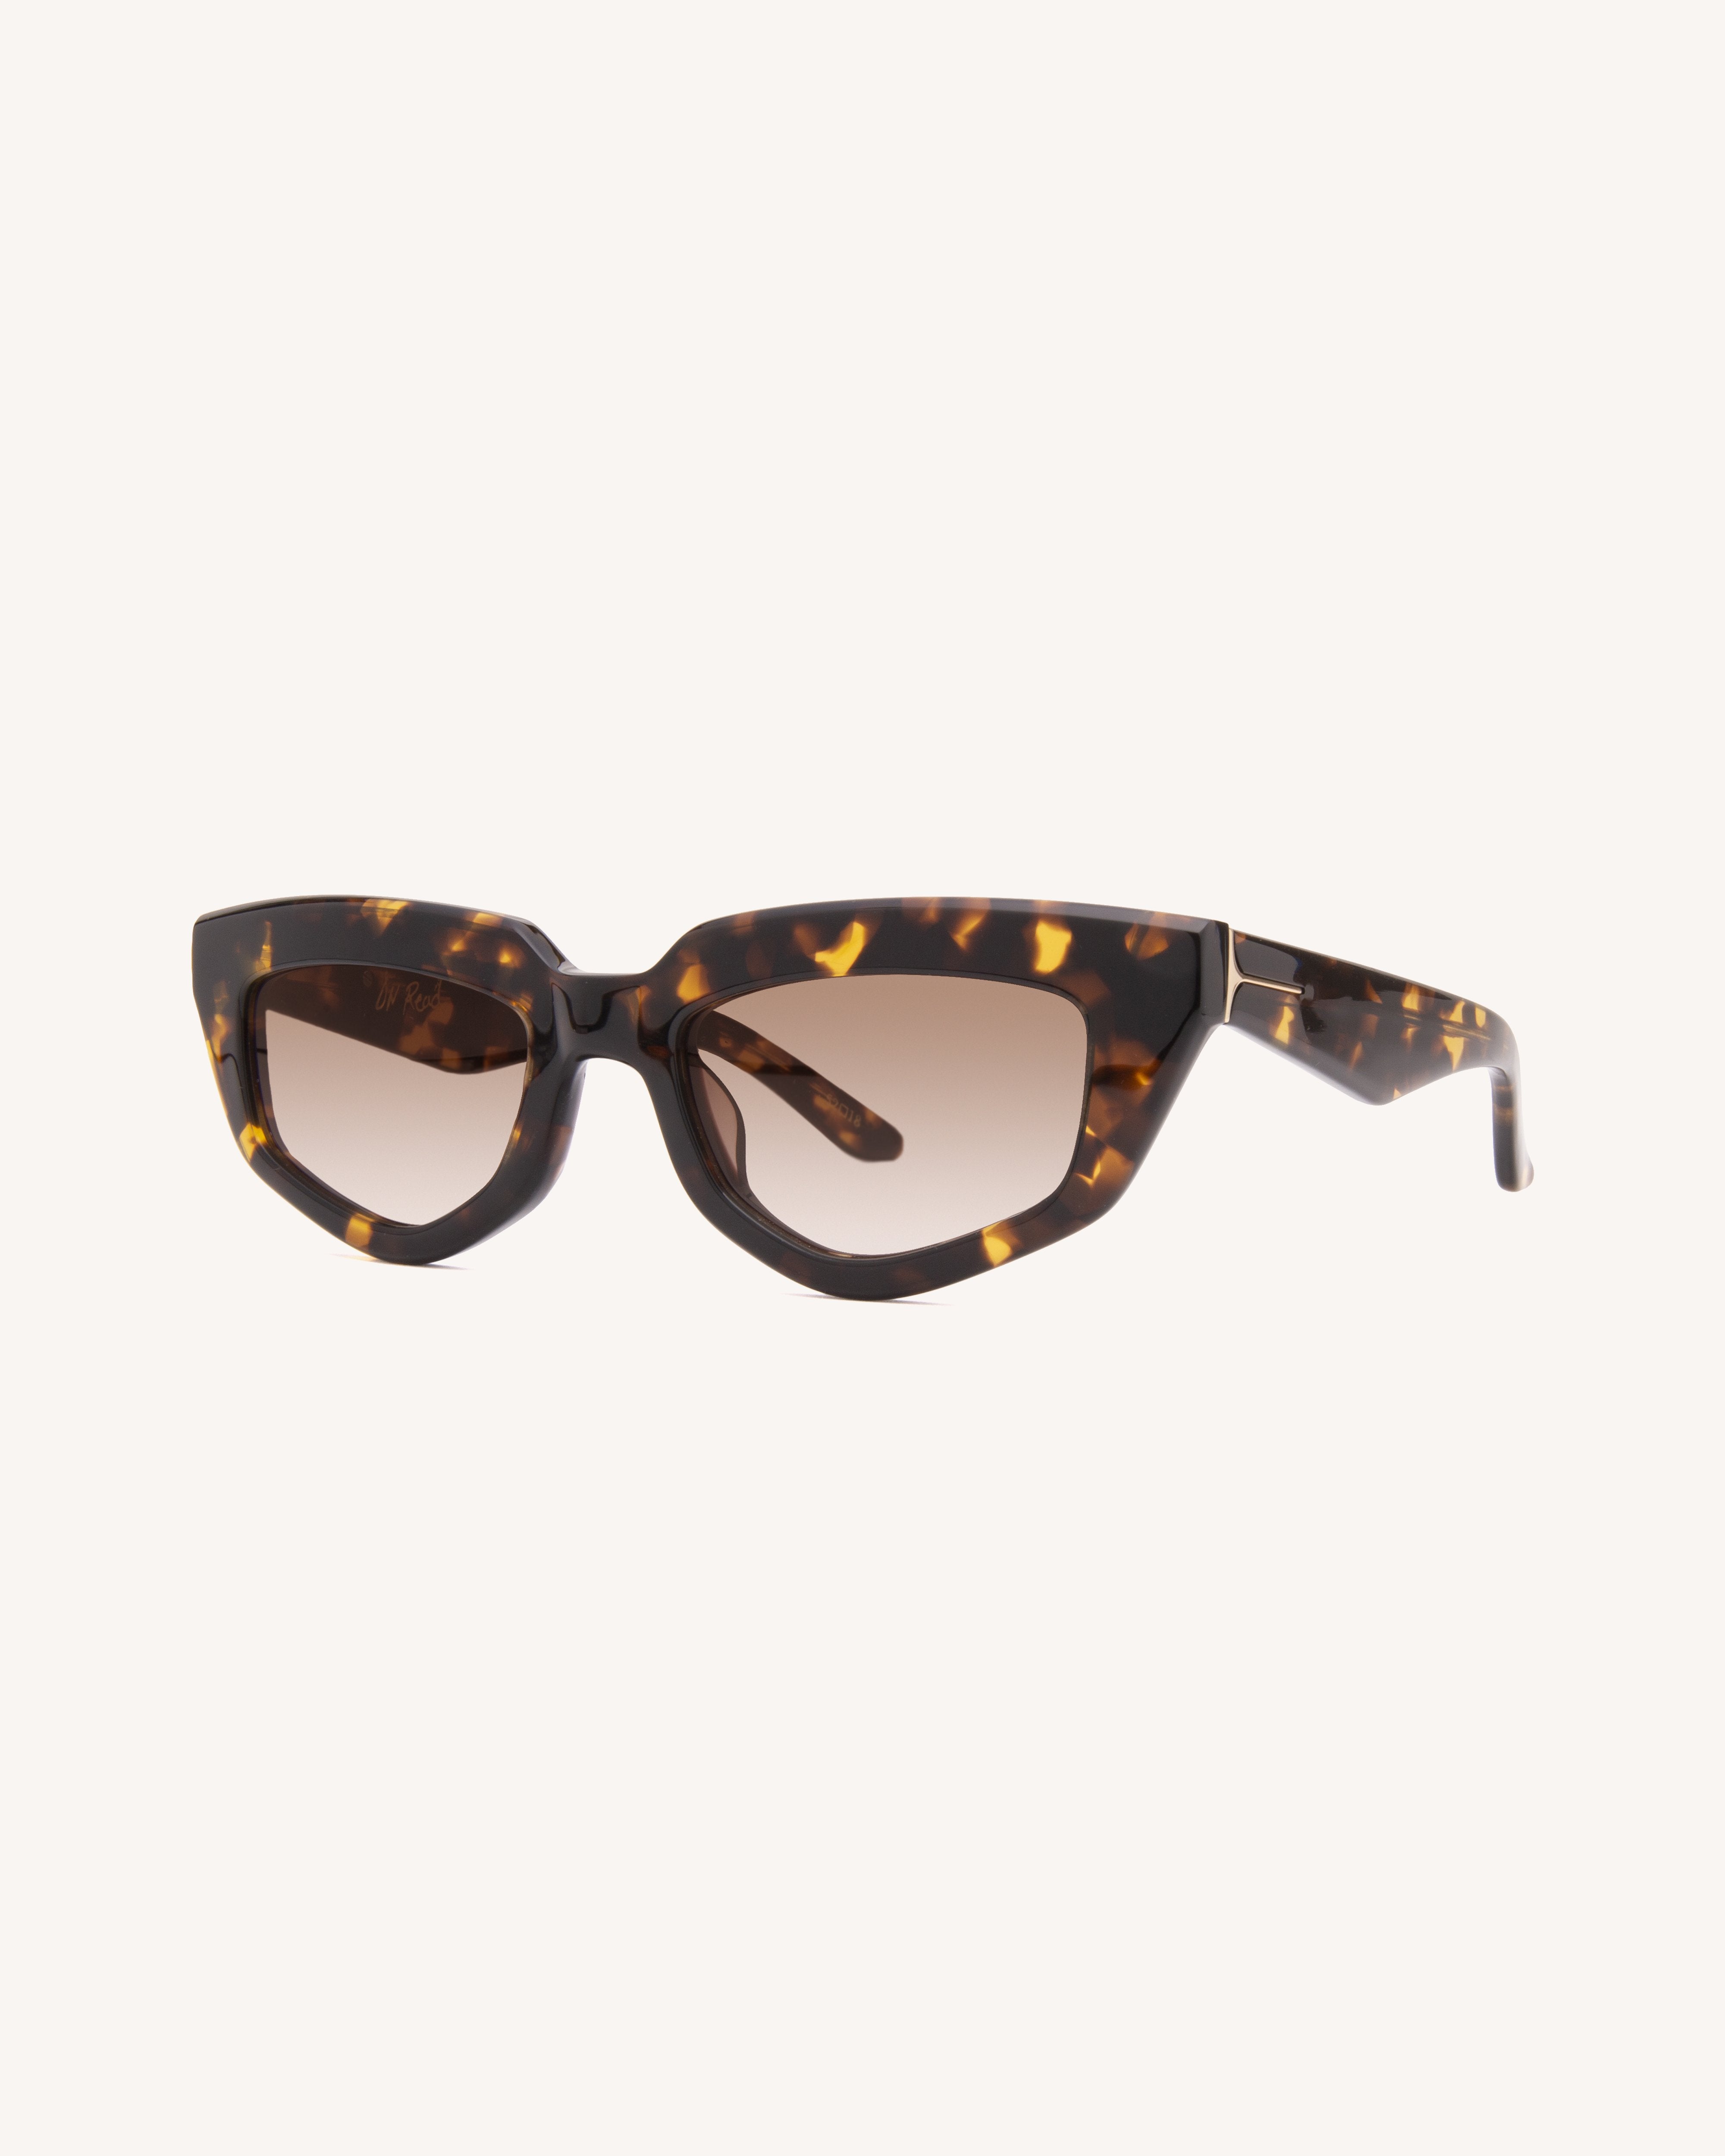 Dezi Eyewear - Fall Back Classic Tortoise / Brown Gradient